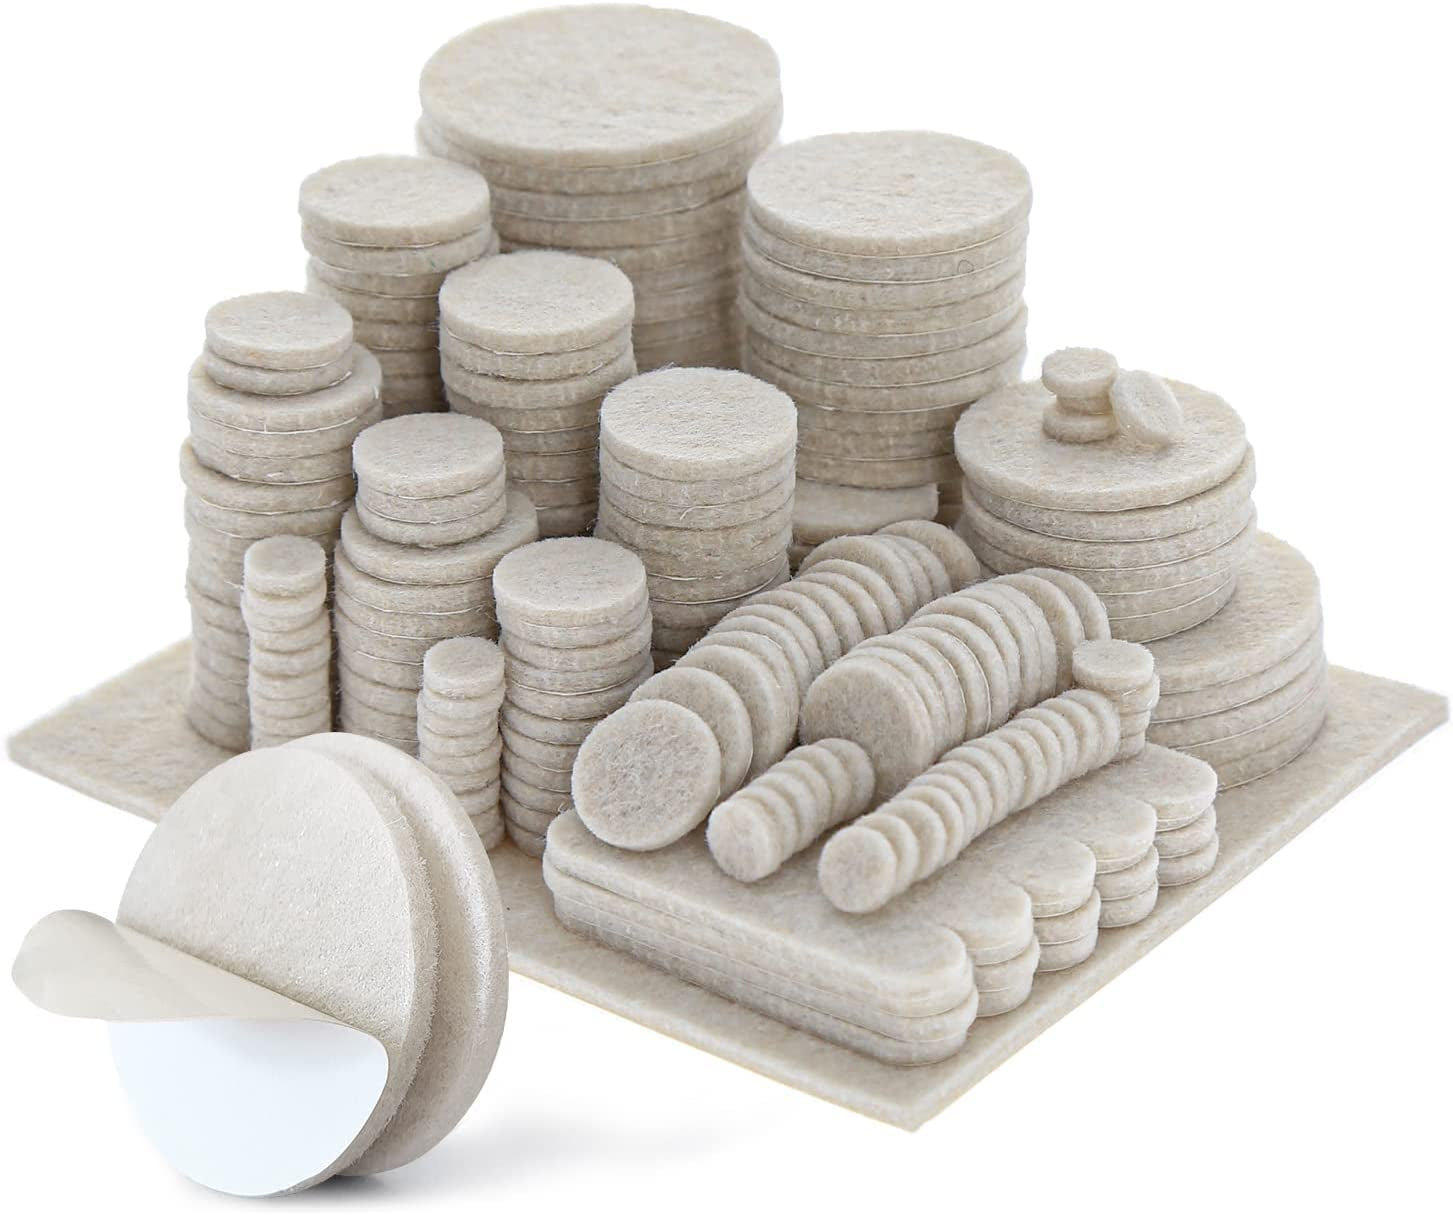 Croch, Felt Furniture Pads 277PCS Assorted Sizes Value Pack Premium Self Adhesive anti Scratch Floors Protectors for Hardwood & Laminate Flooring